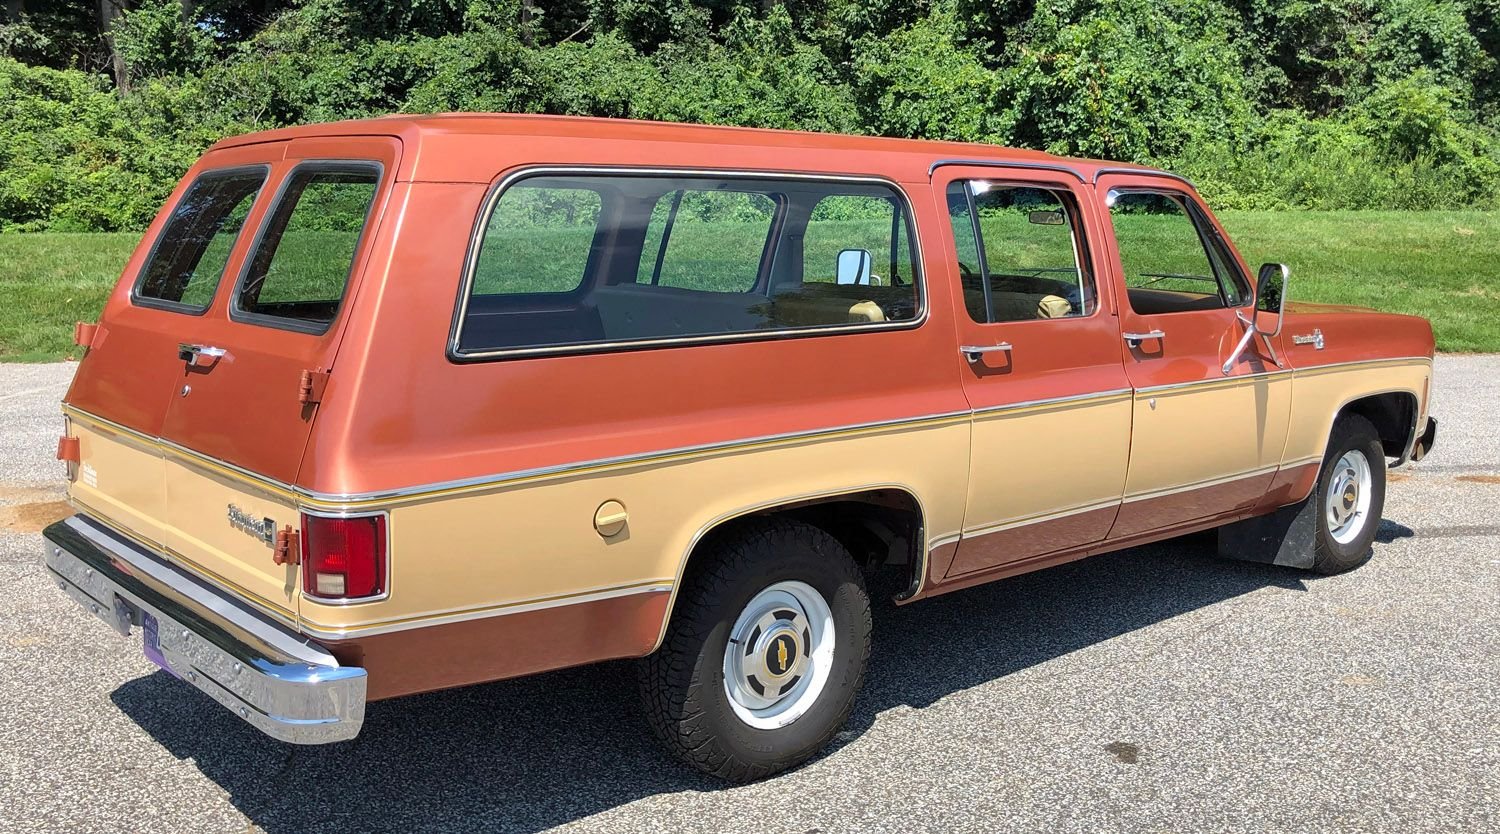 1977 Chevrolet Suburban